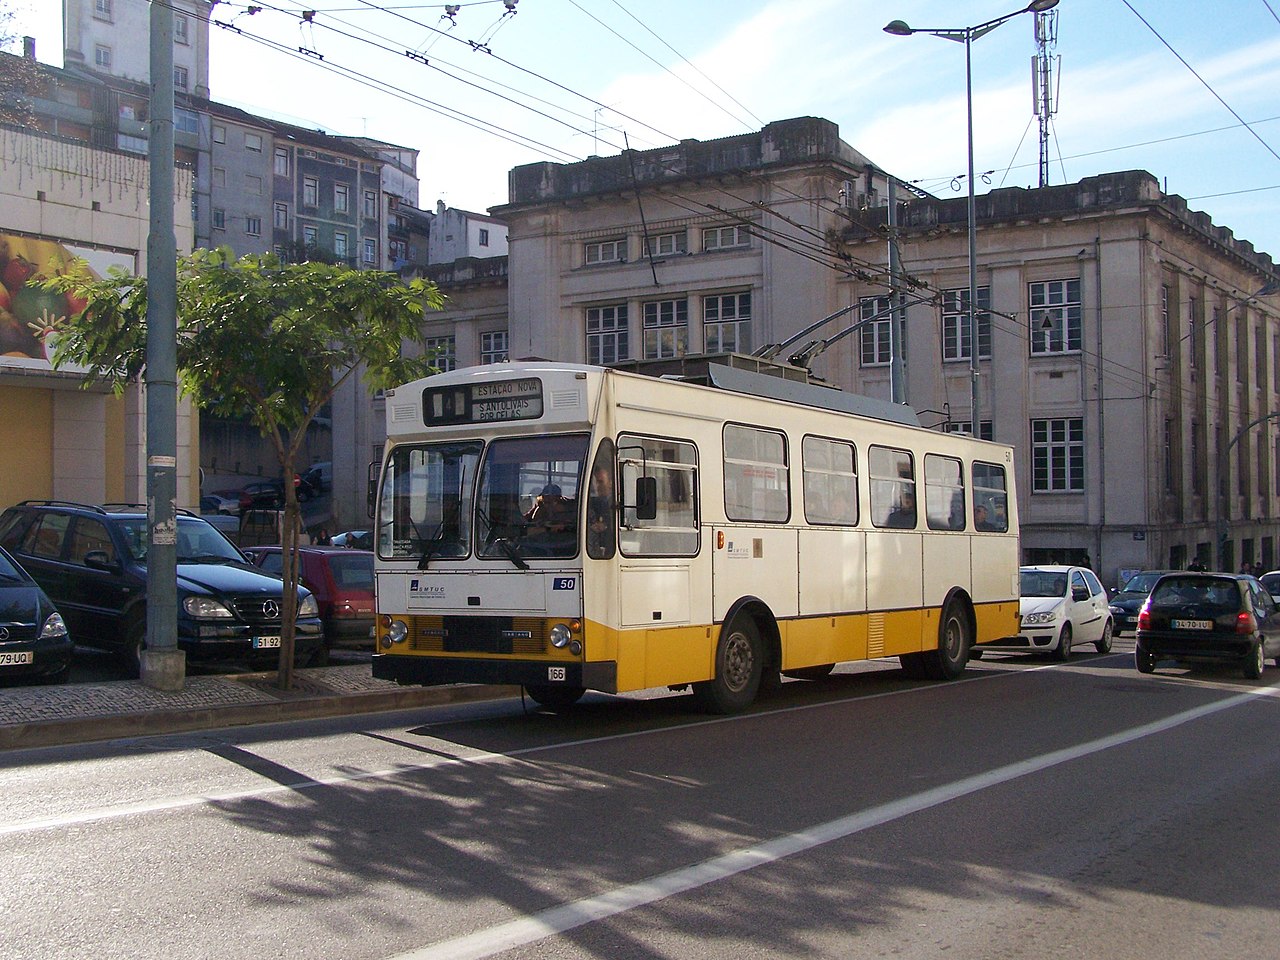 File:Áreas Urbanas de Portugal.jpg - Wikimedia Commons